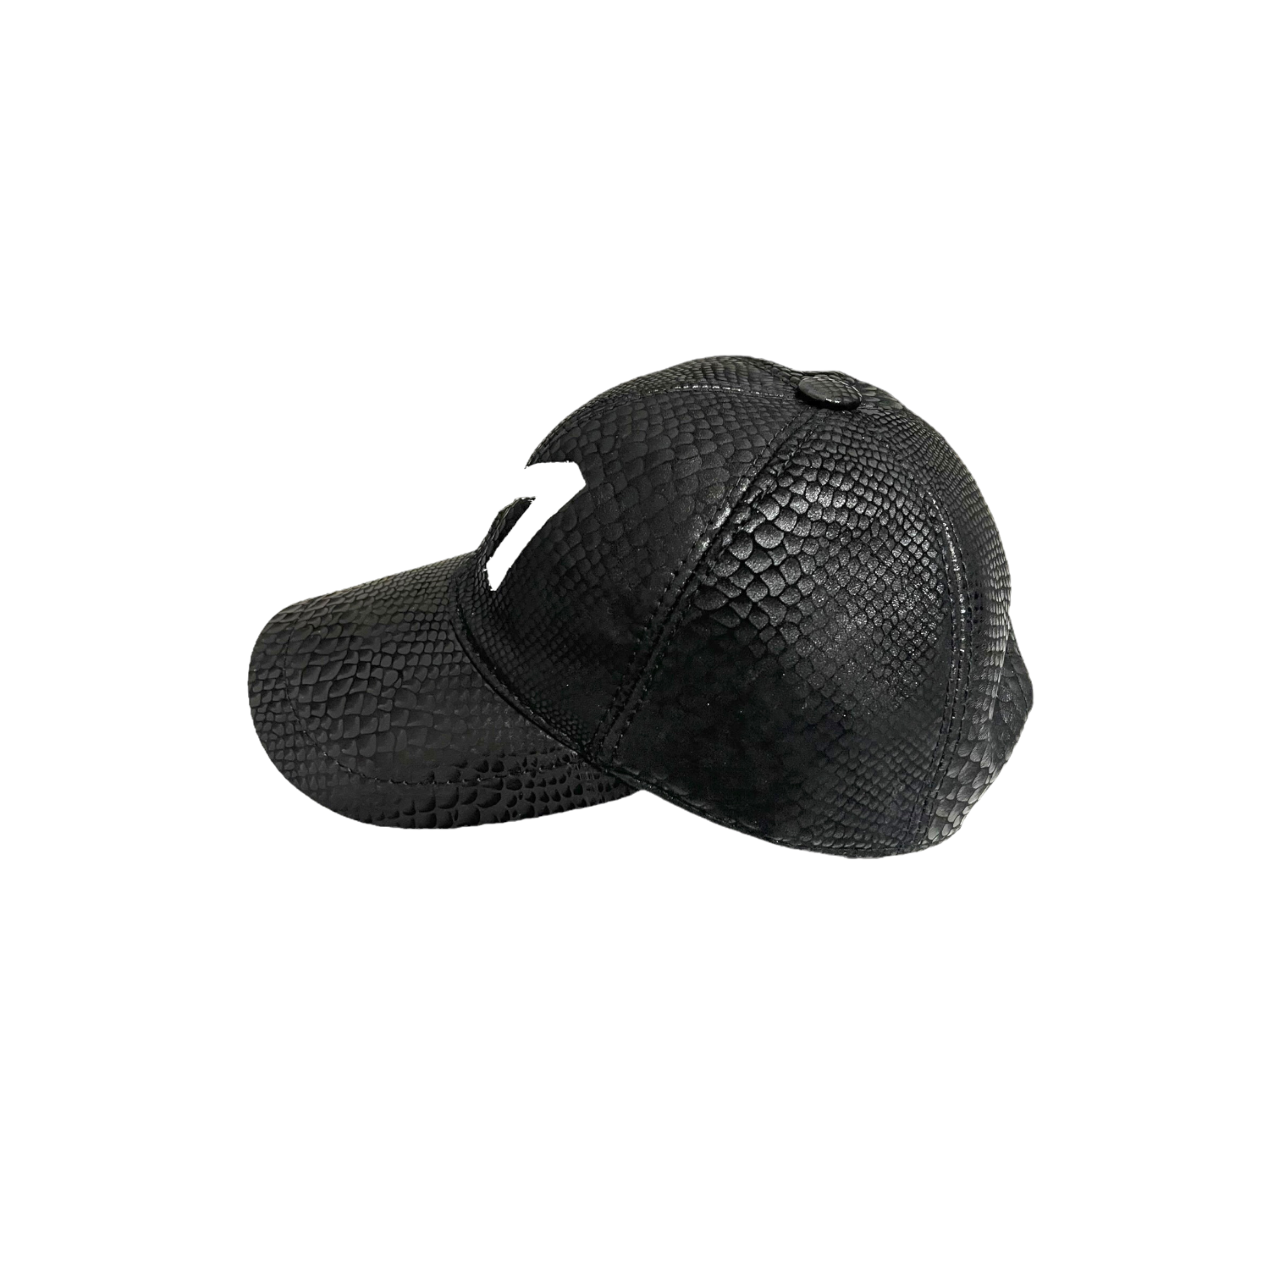 APOLINAR Black Exotic hat white logo